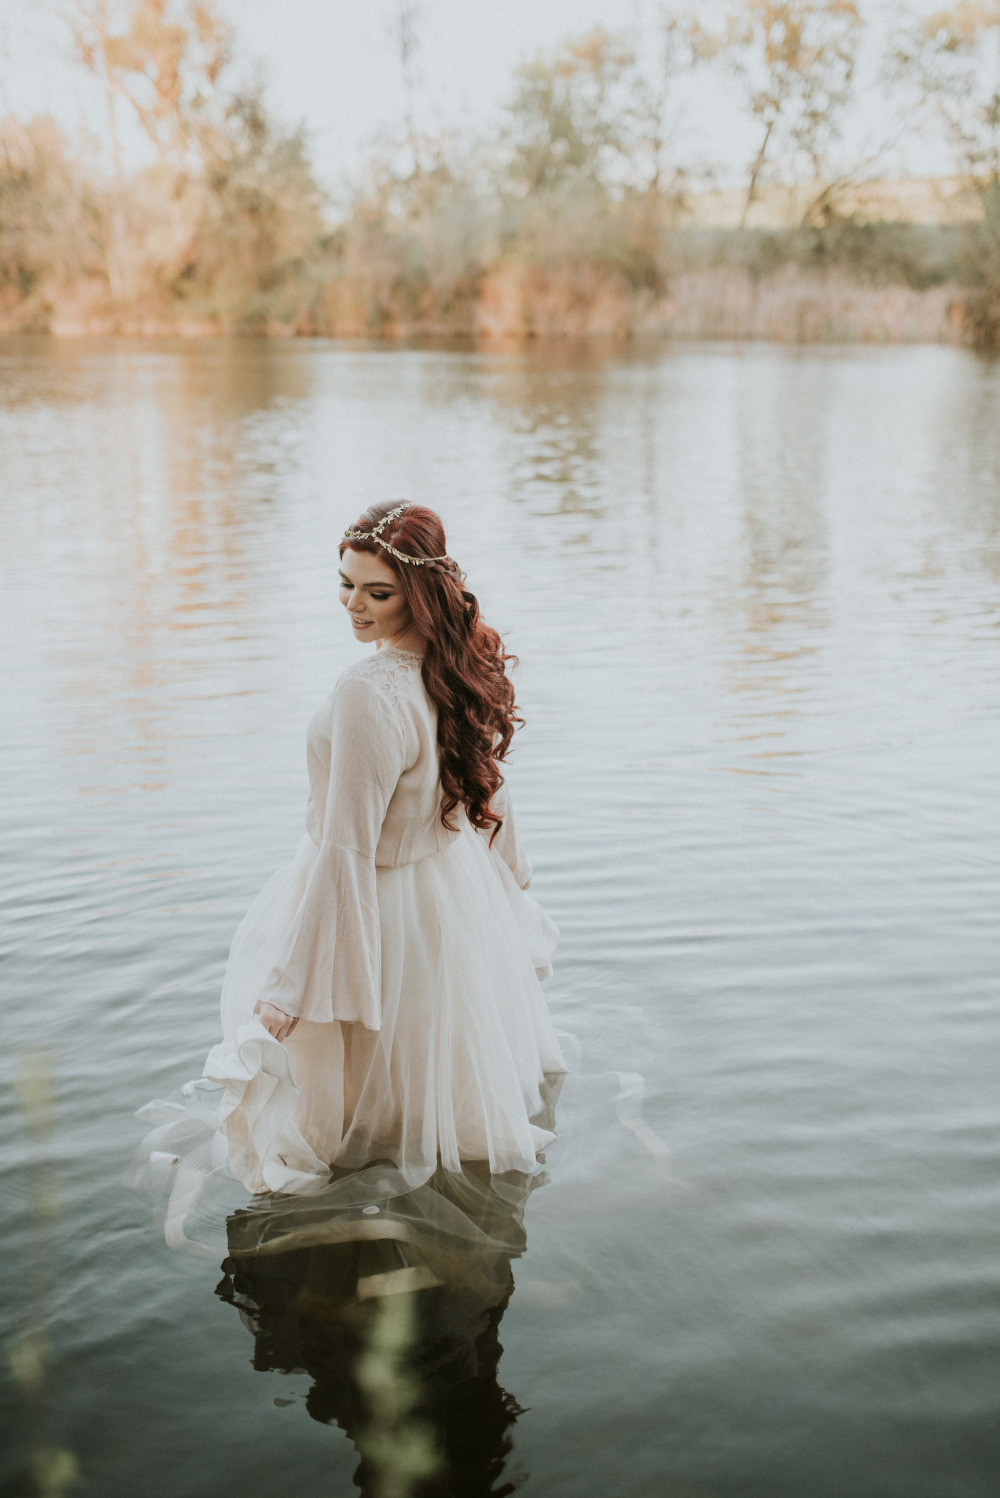 beautiful wedding dress photo in the river